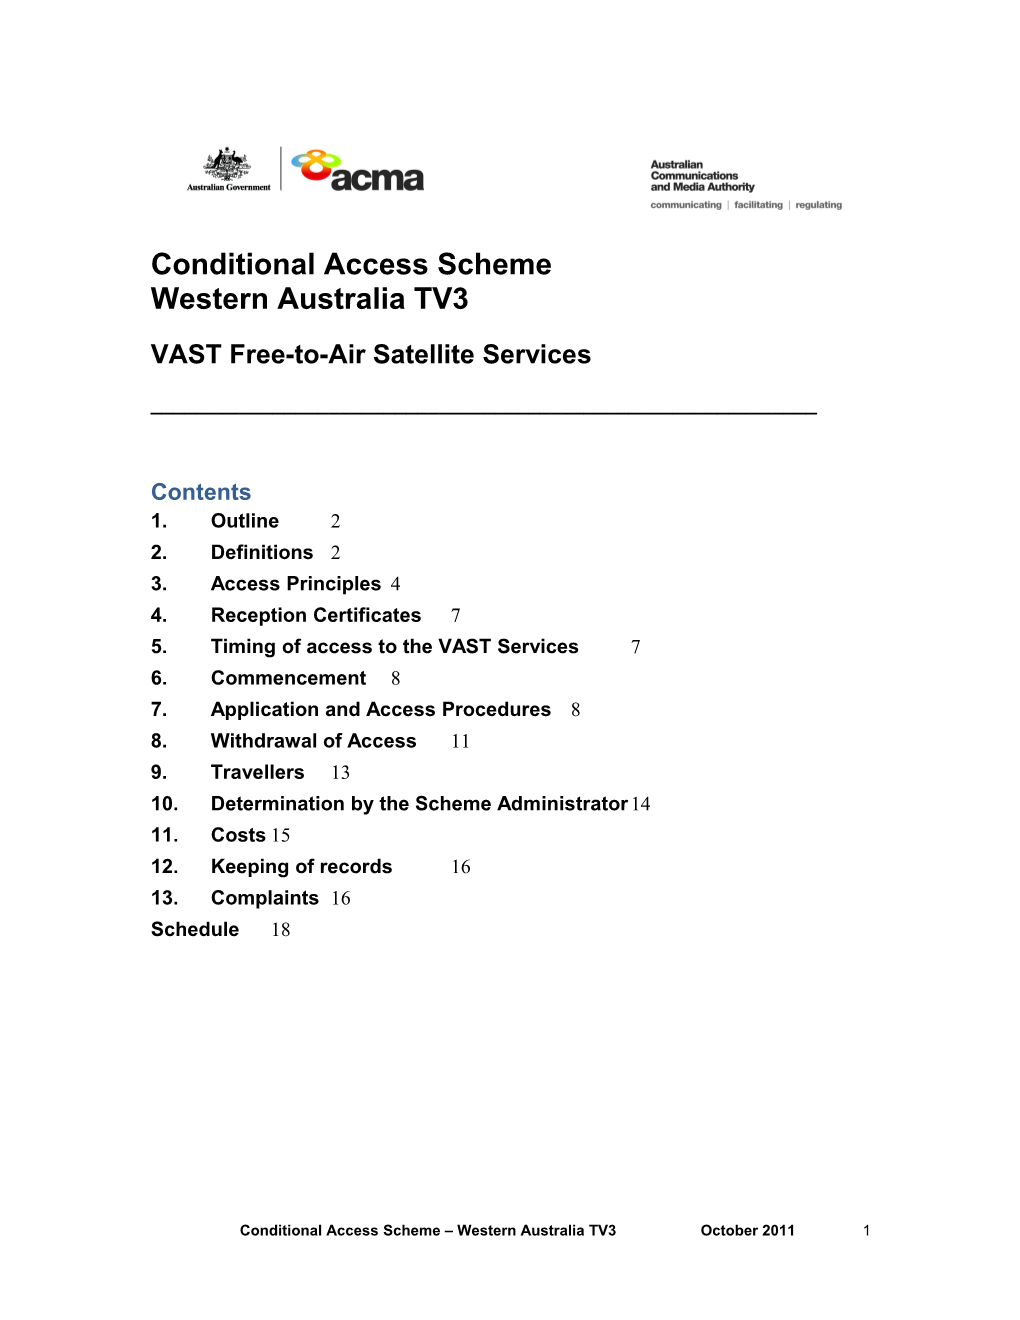 Conditional Access Scheme Western Australia TV3 - Vast Free-To-Air Satellite Services